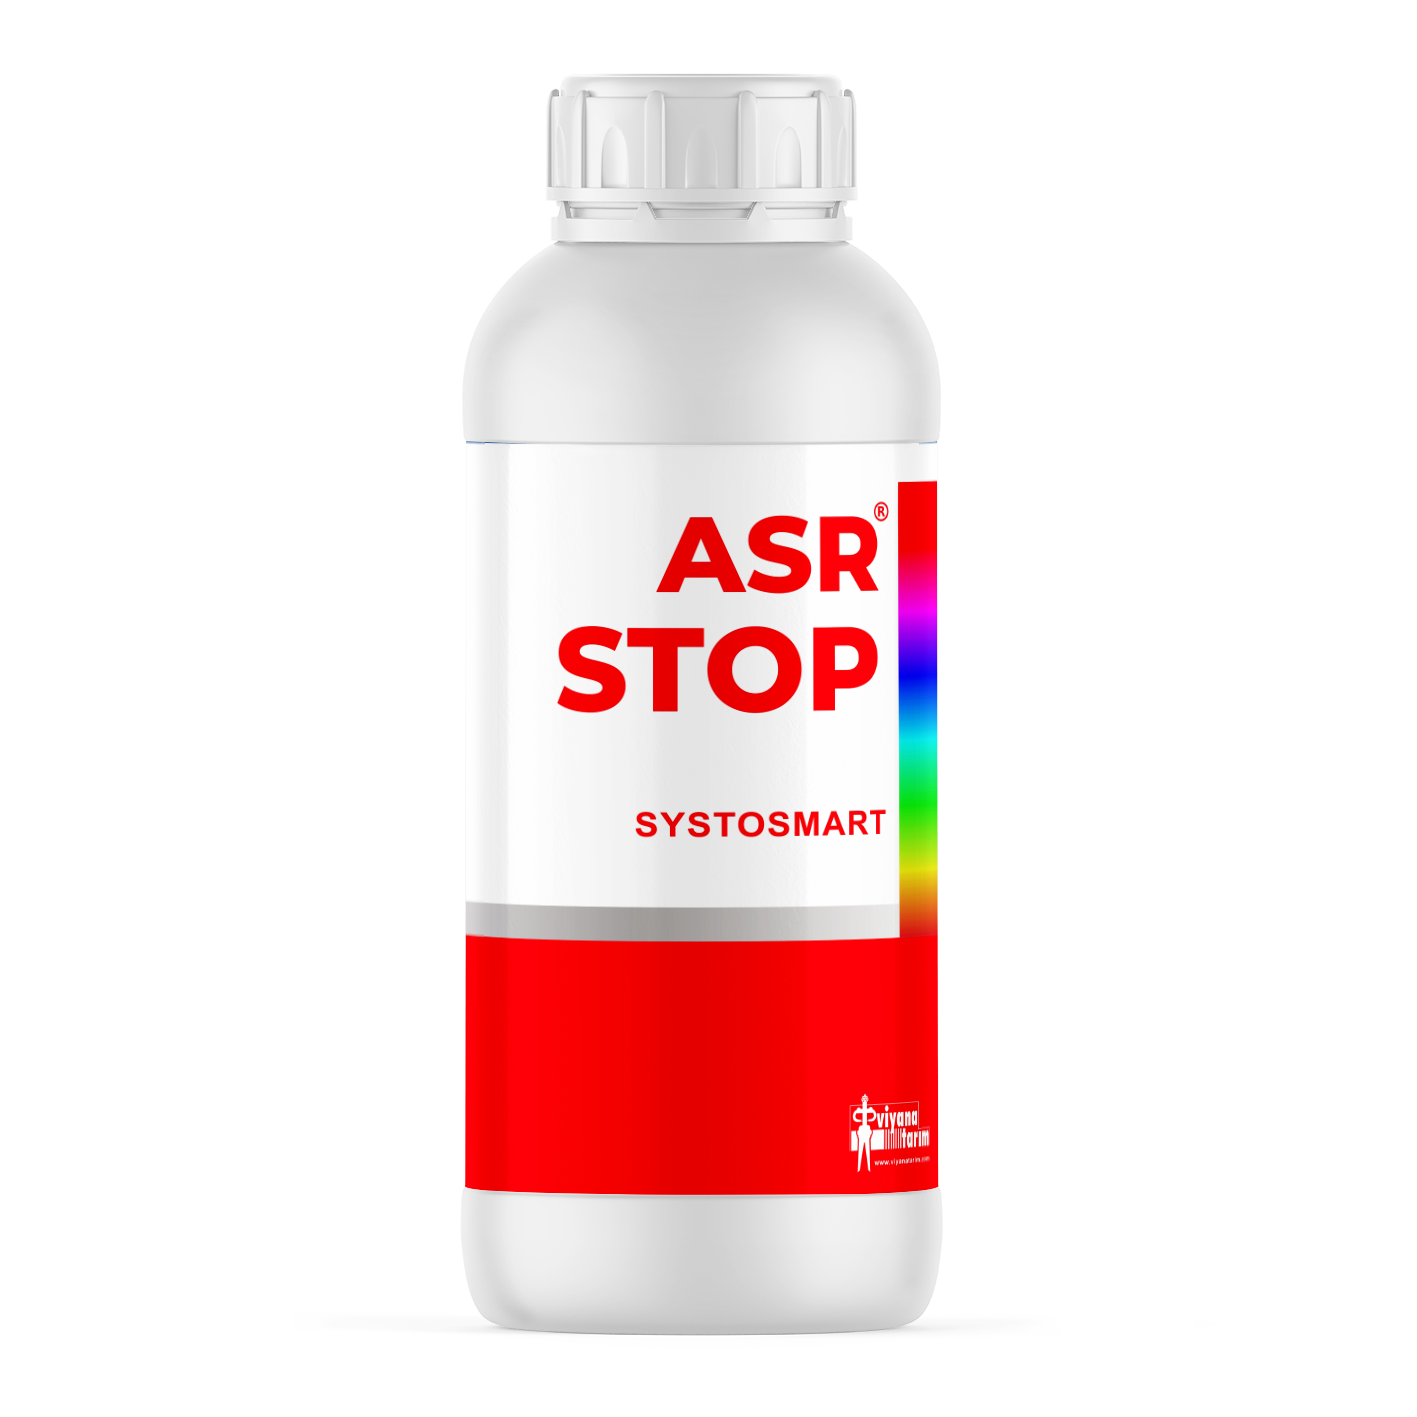 ASR STOP